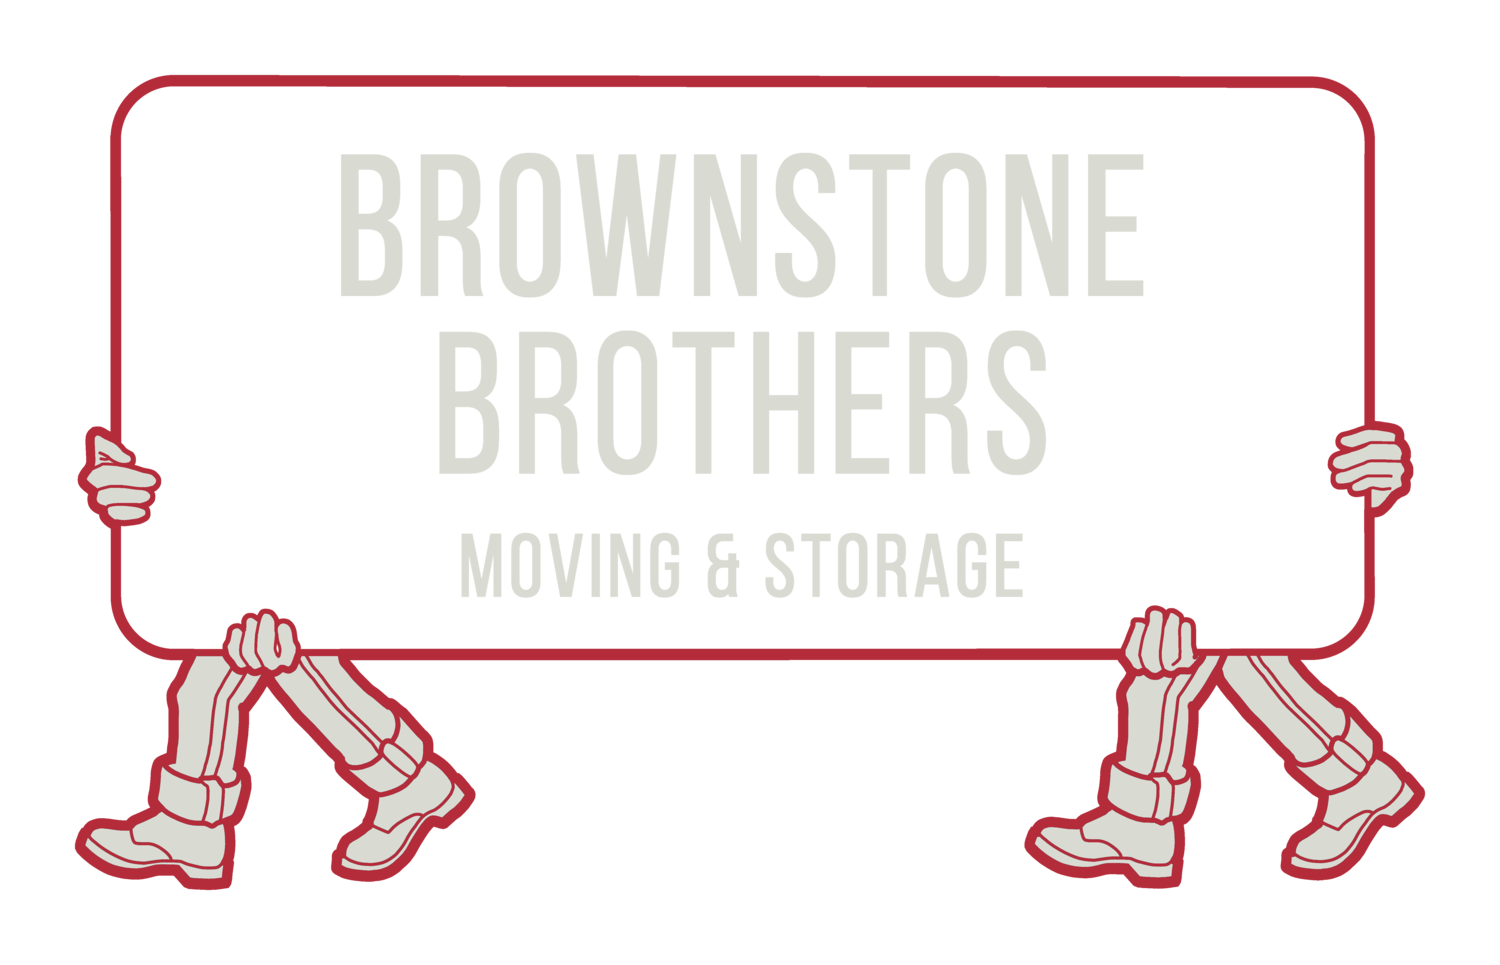 Brownstone Brothers Moving & Storage